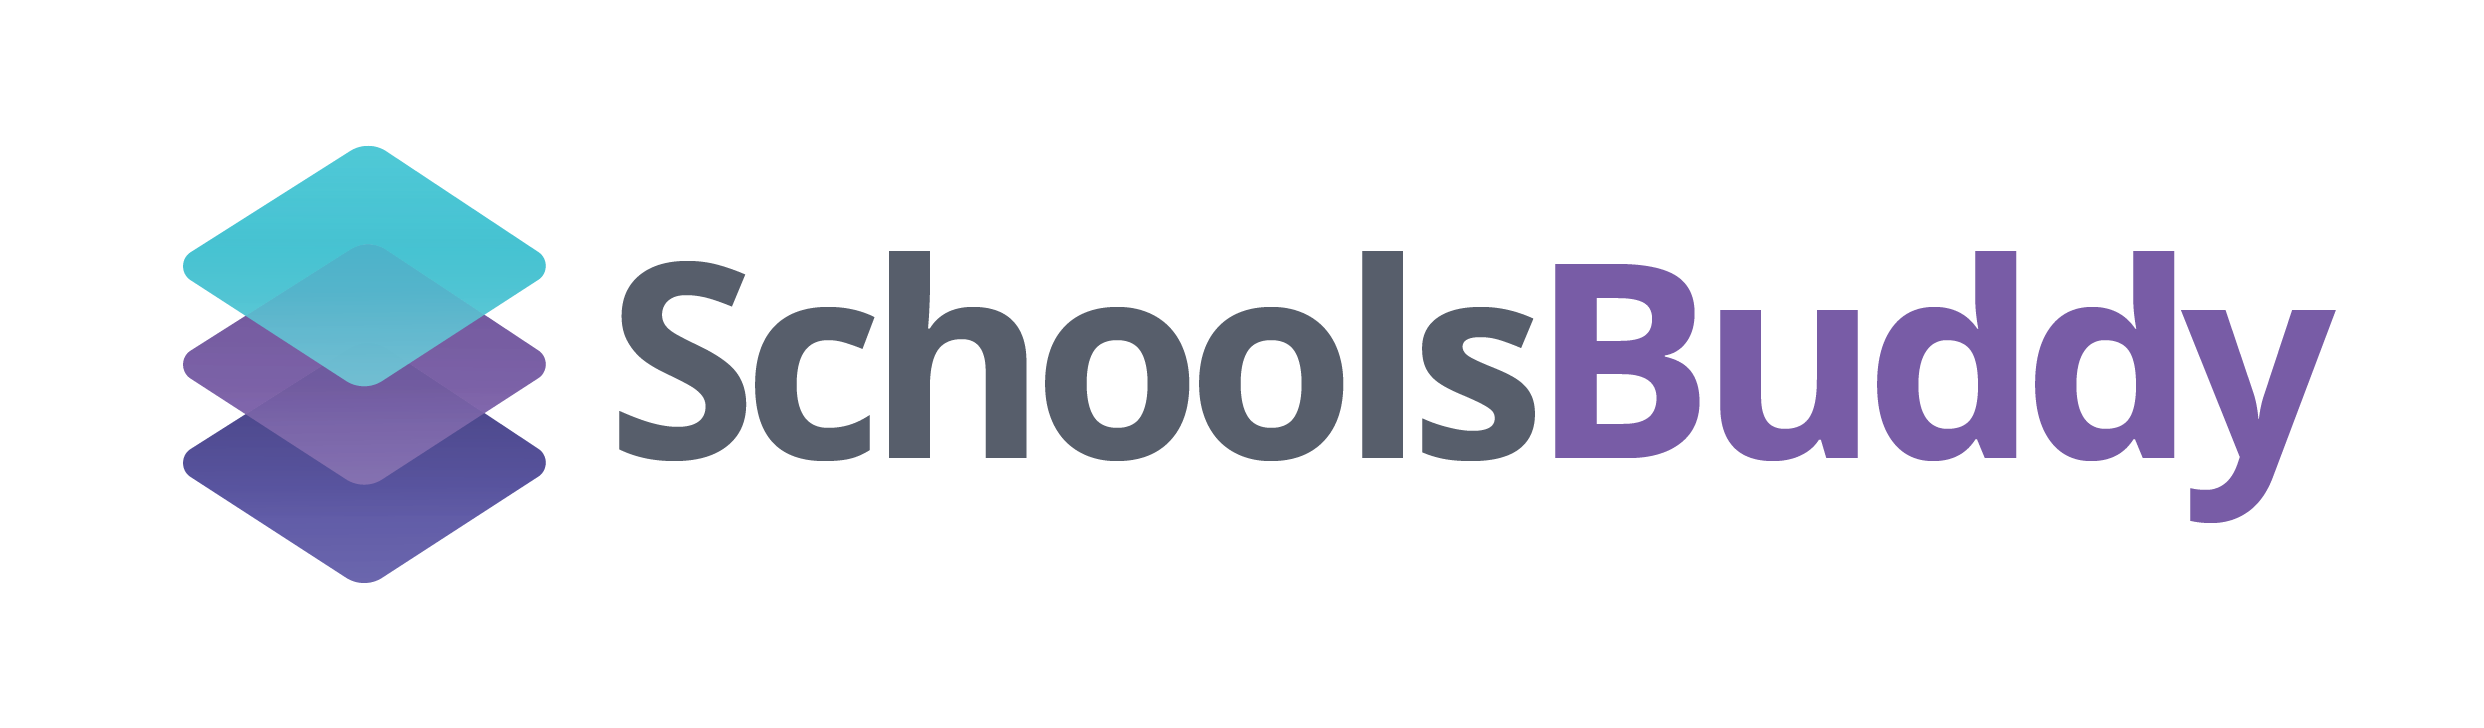 logo schoolsbuddy